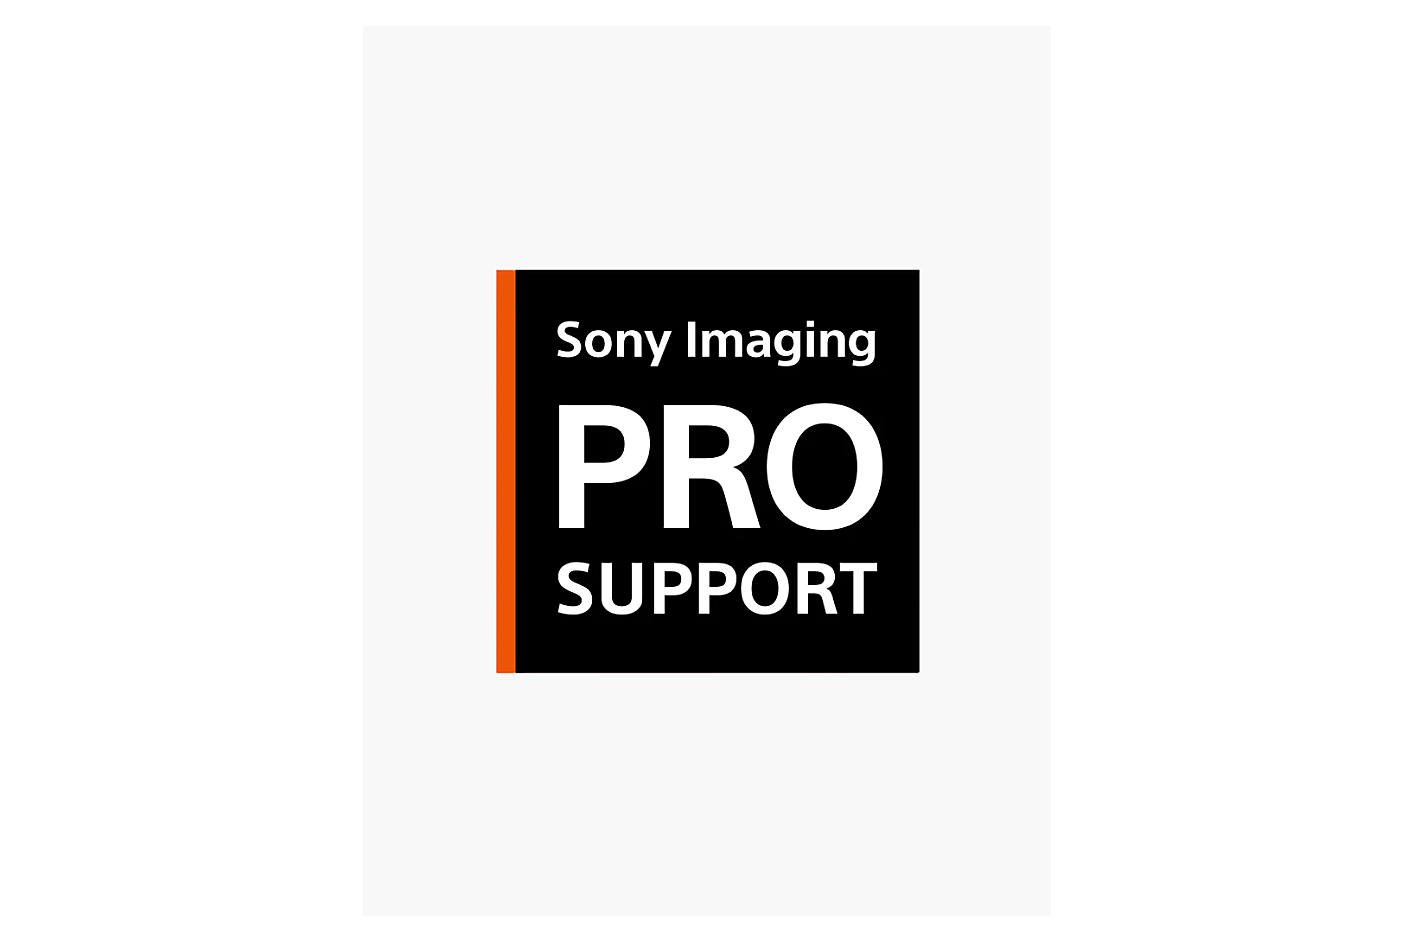 Logotipo de Imaging Pro Support de Sony